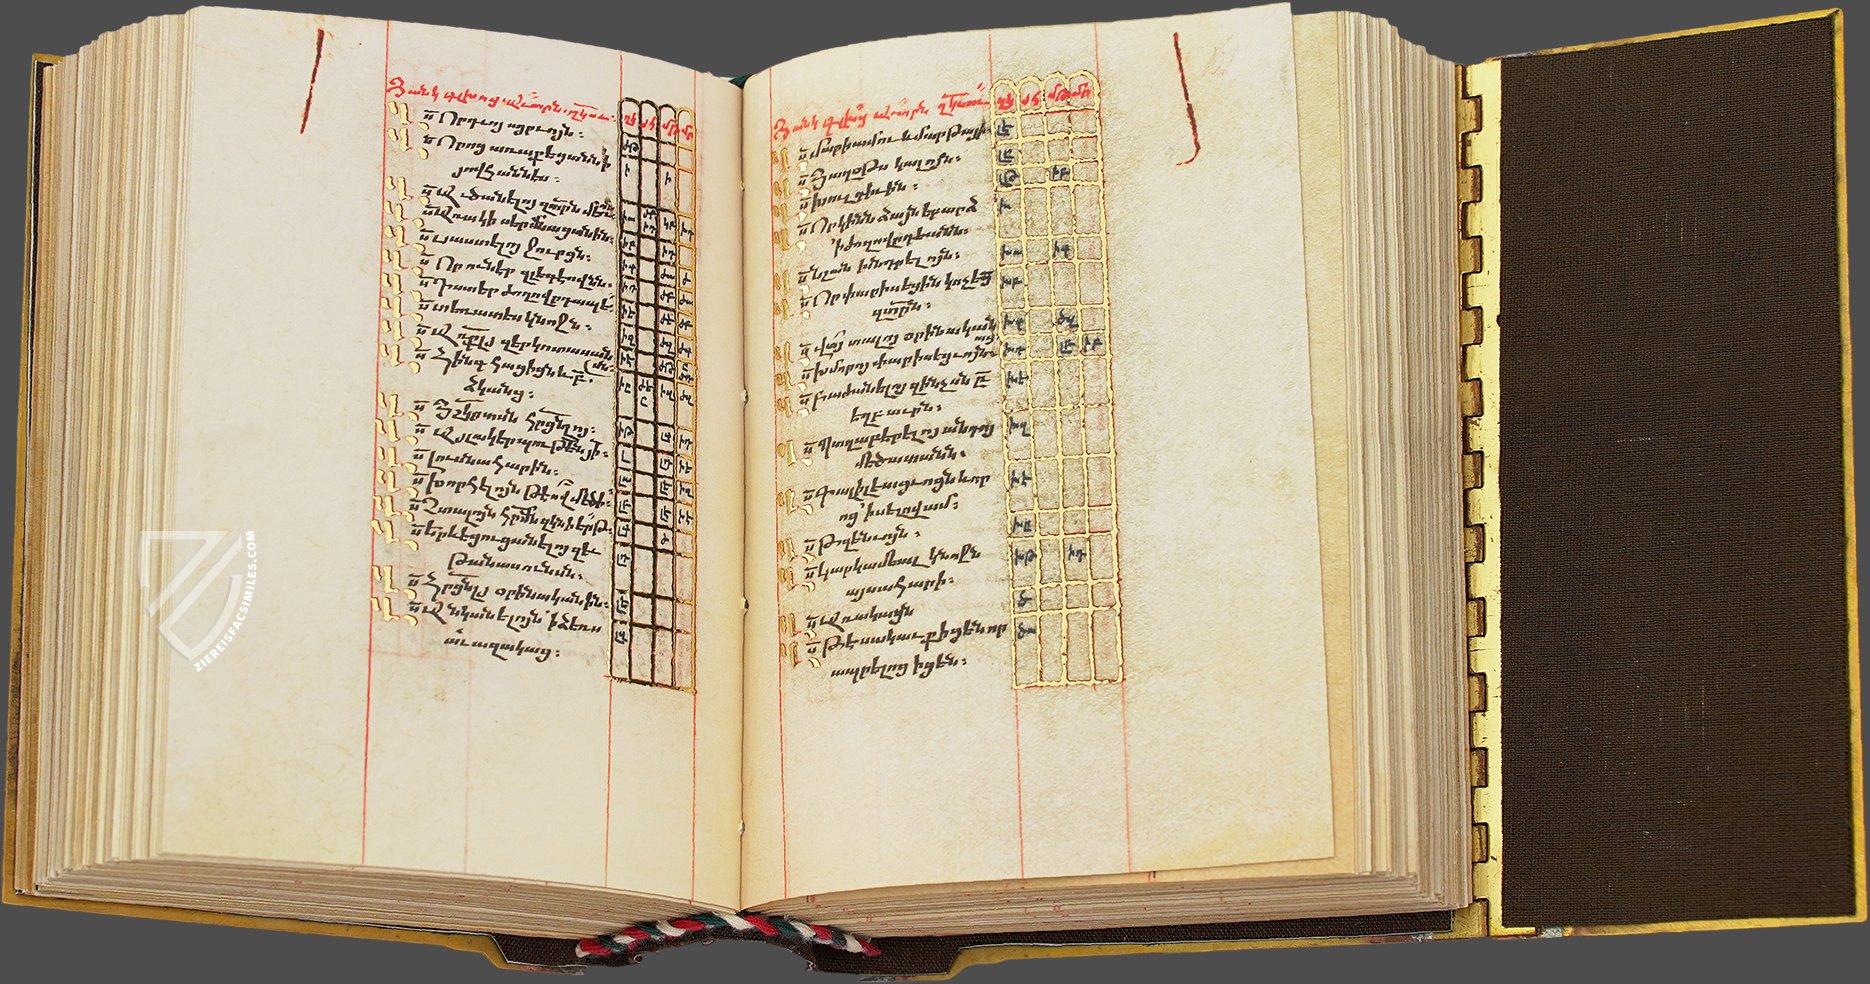 File:The first Bible printed in the Armenian language.jpg - Wikipedia